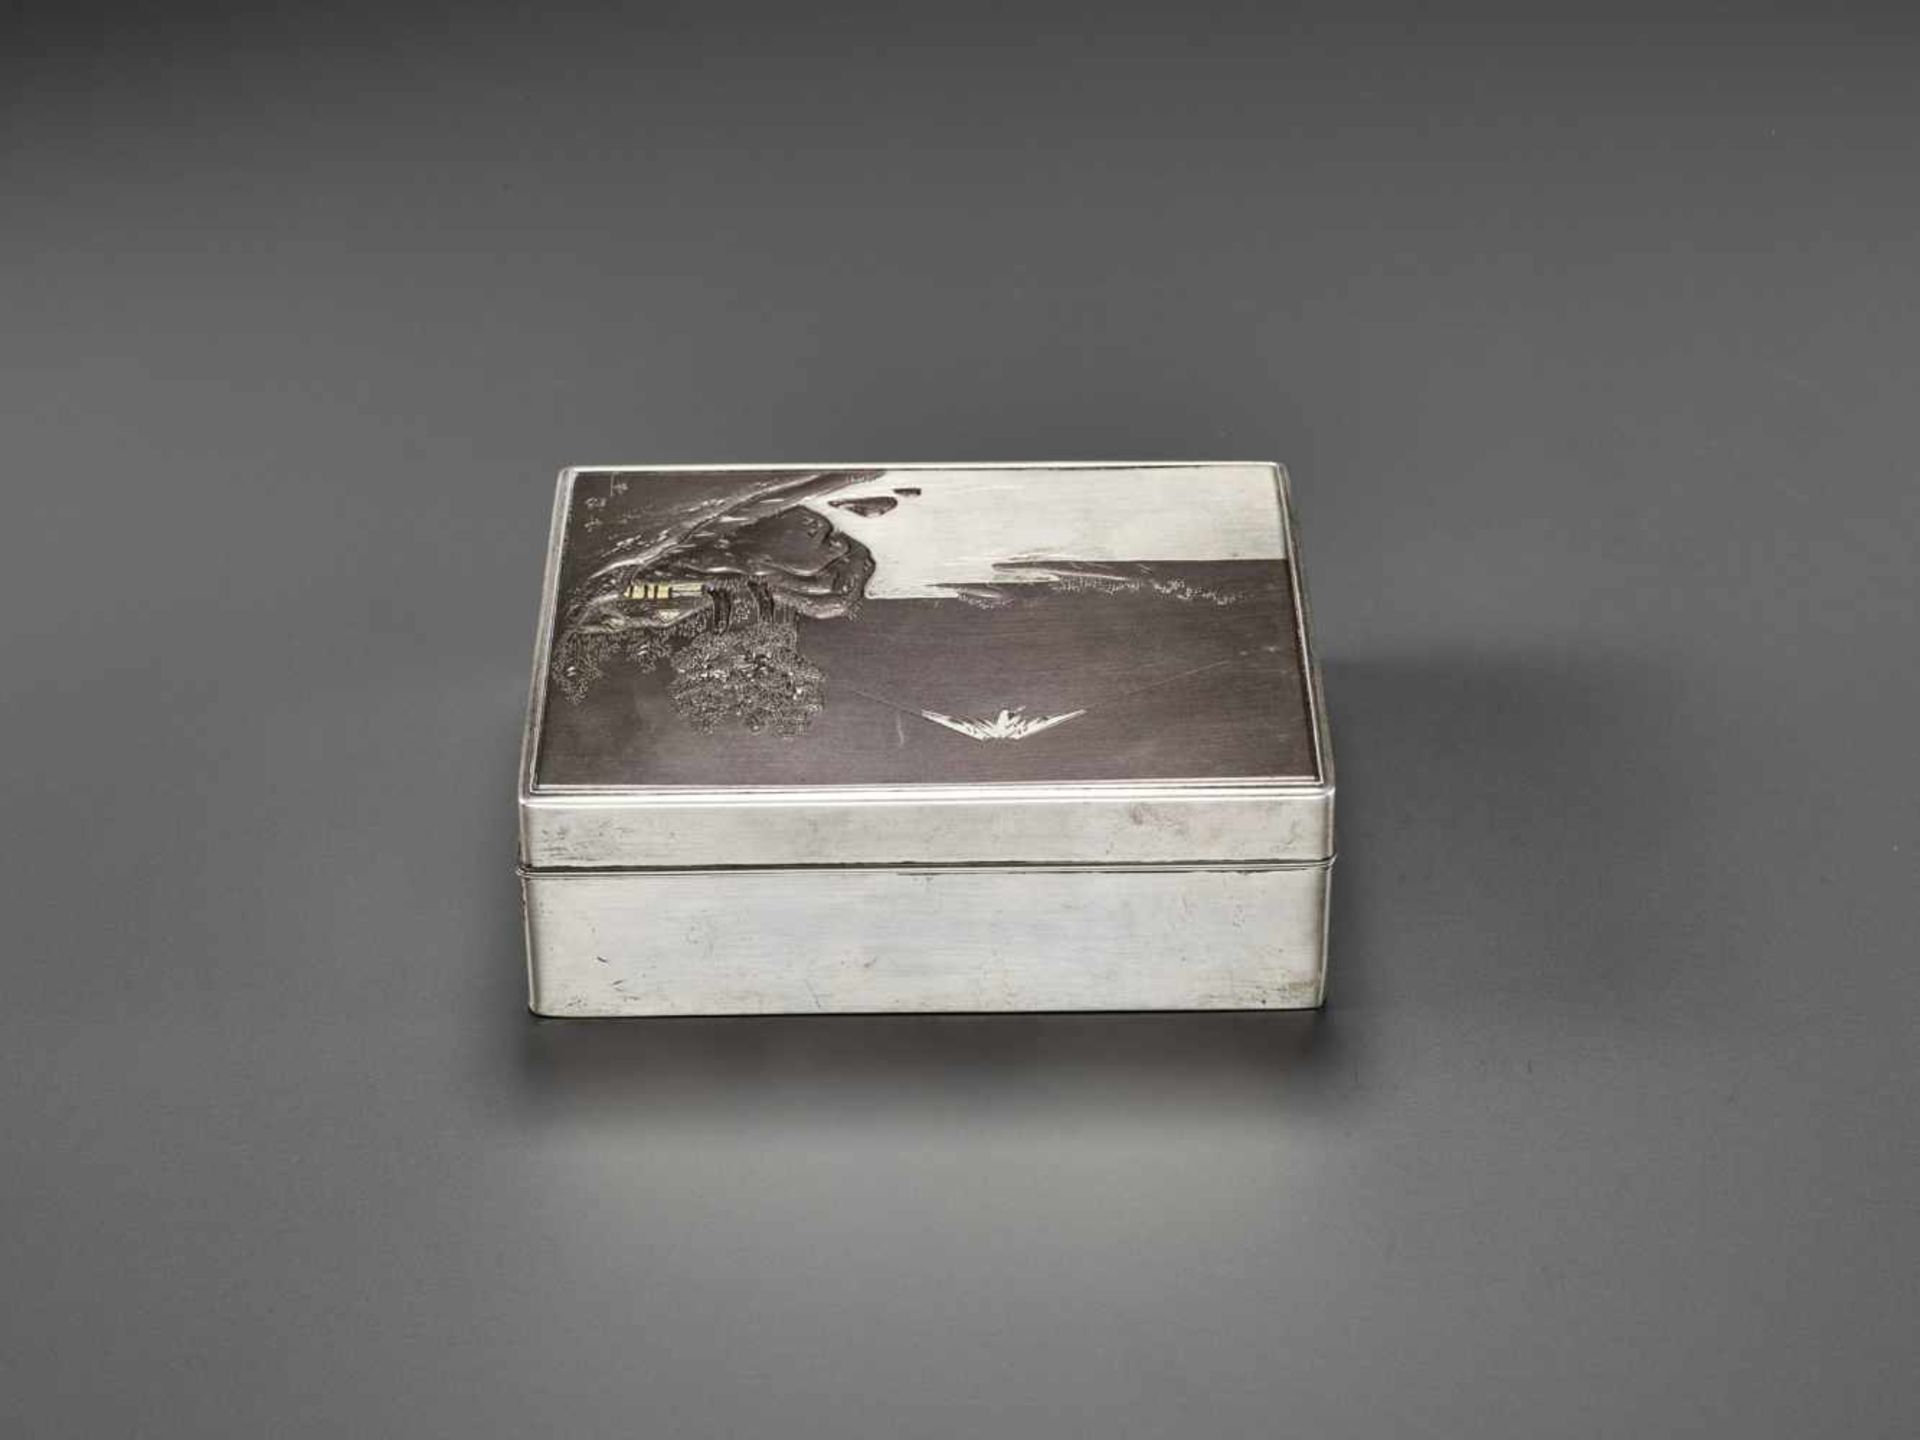 CHIKUSHIN: AN ICONIC ‘MOUNT FUJI’ SILVER BOX By Chikushin for the Miyamoto company, signed Chikushin - Image 5 of 9